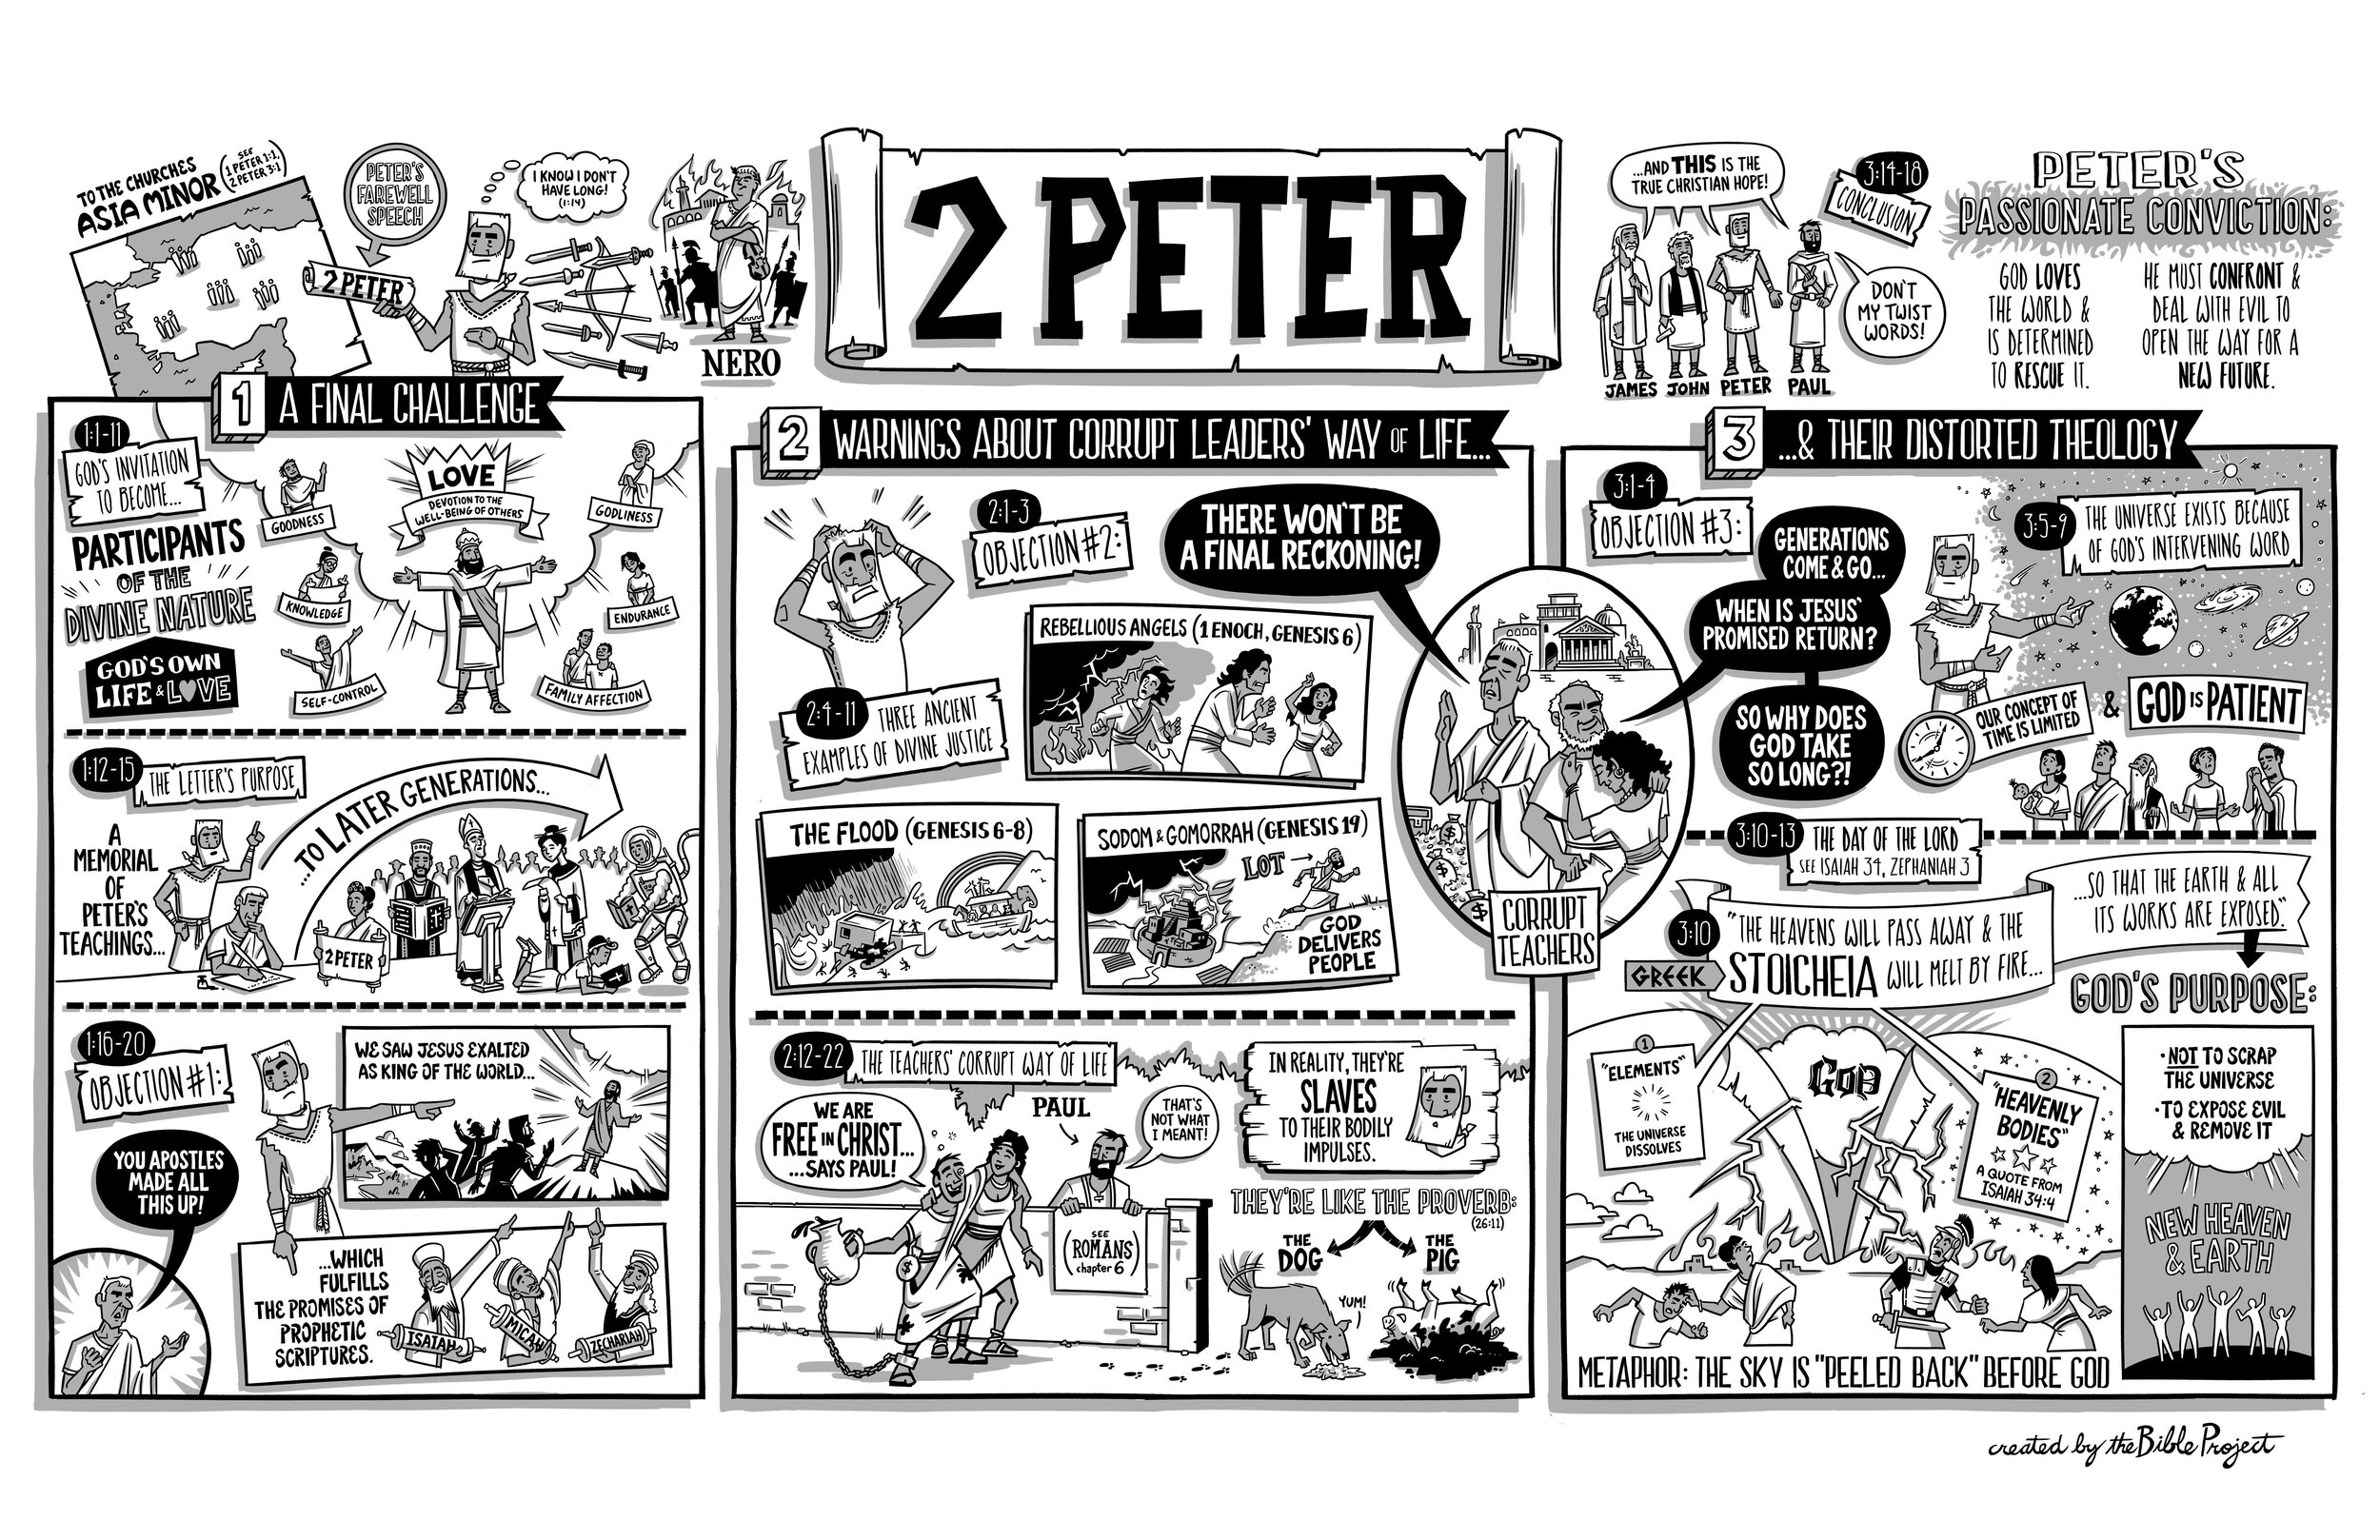 BibleProject: 2 Peter (Video)